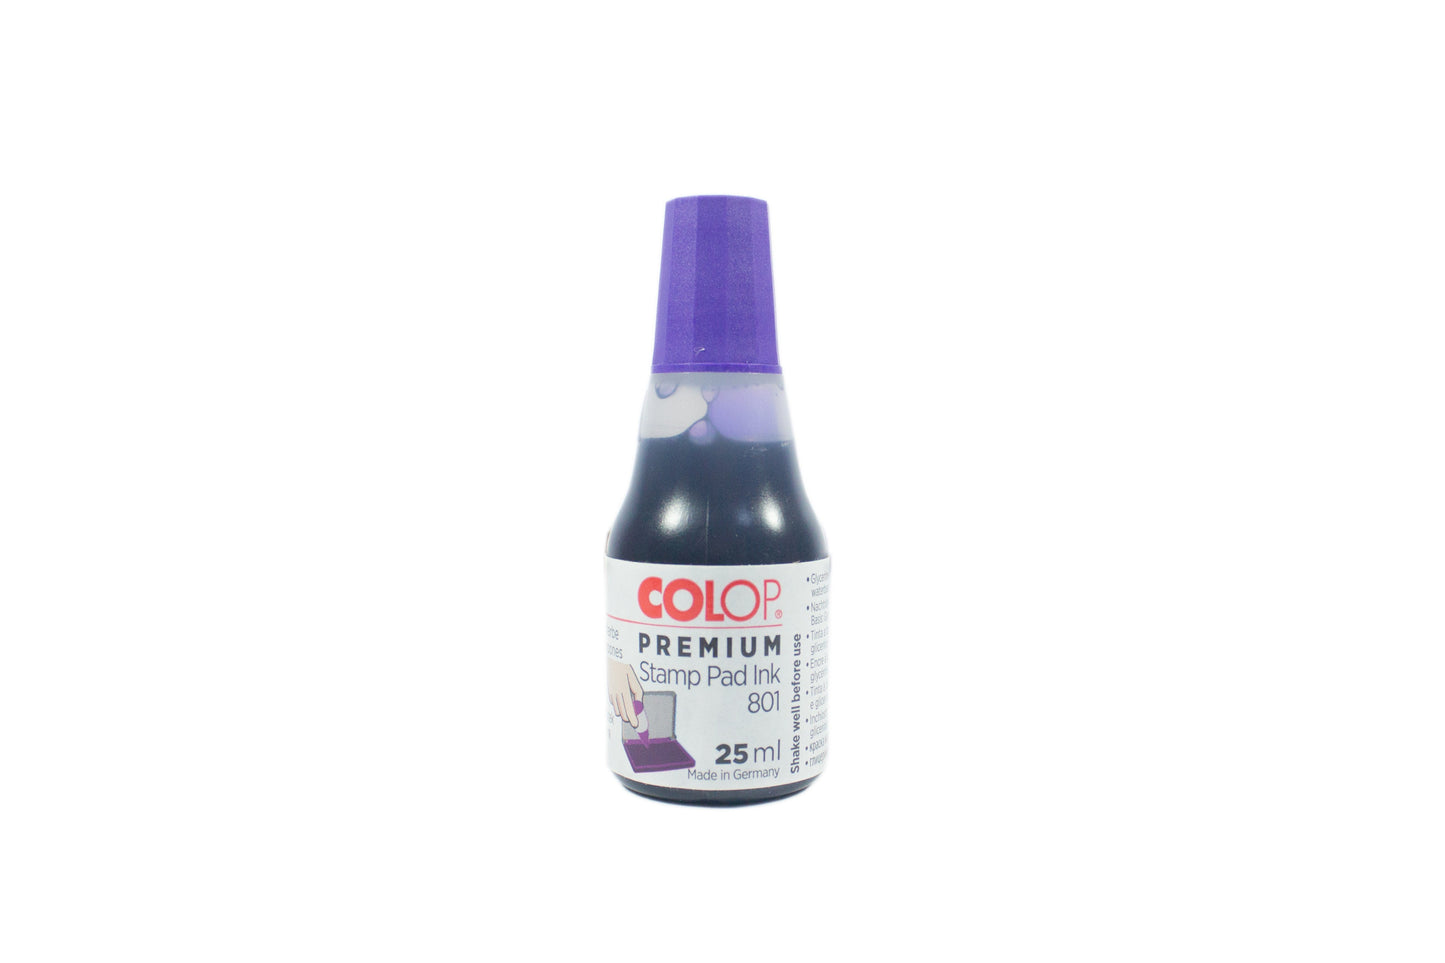 Colop Premium Stamp Pad Ink 801 | 10pcs